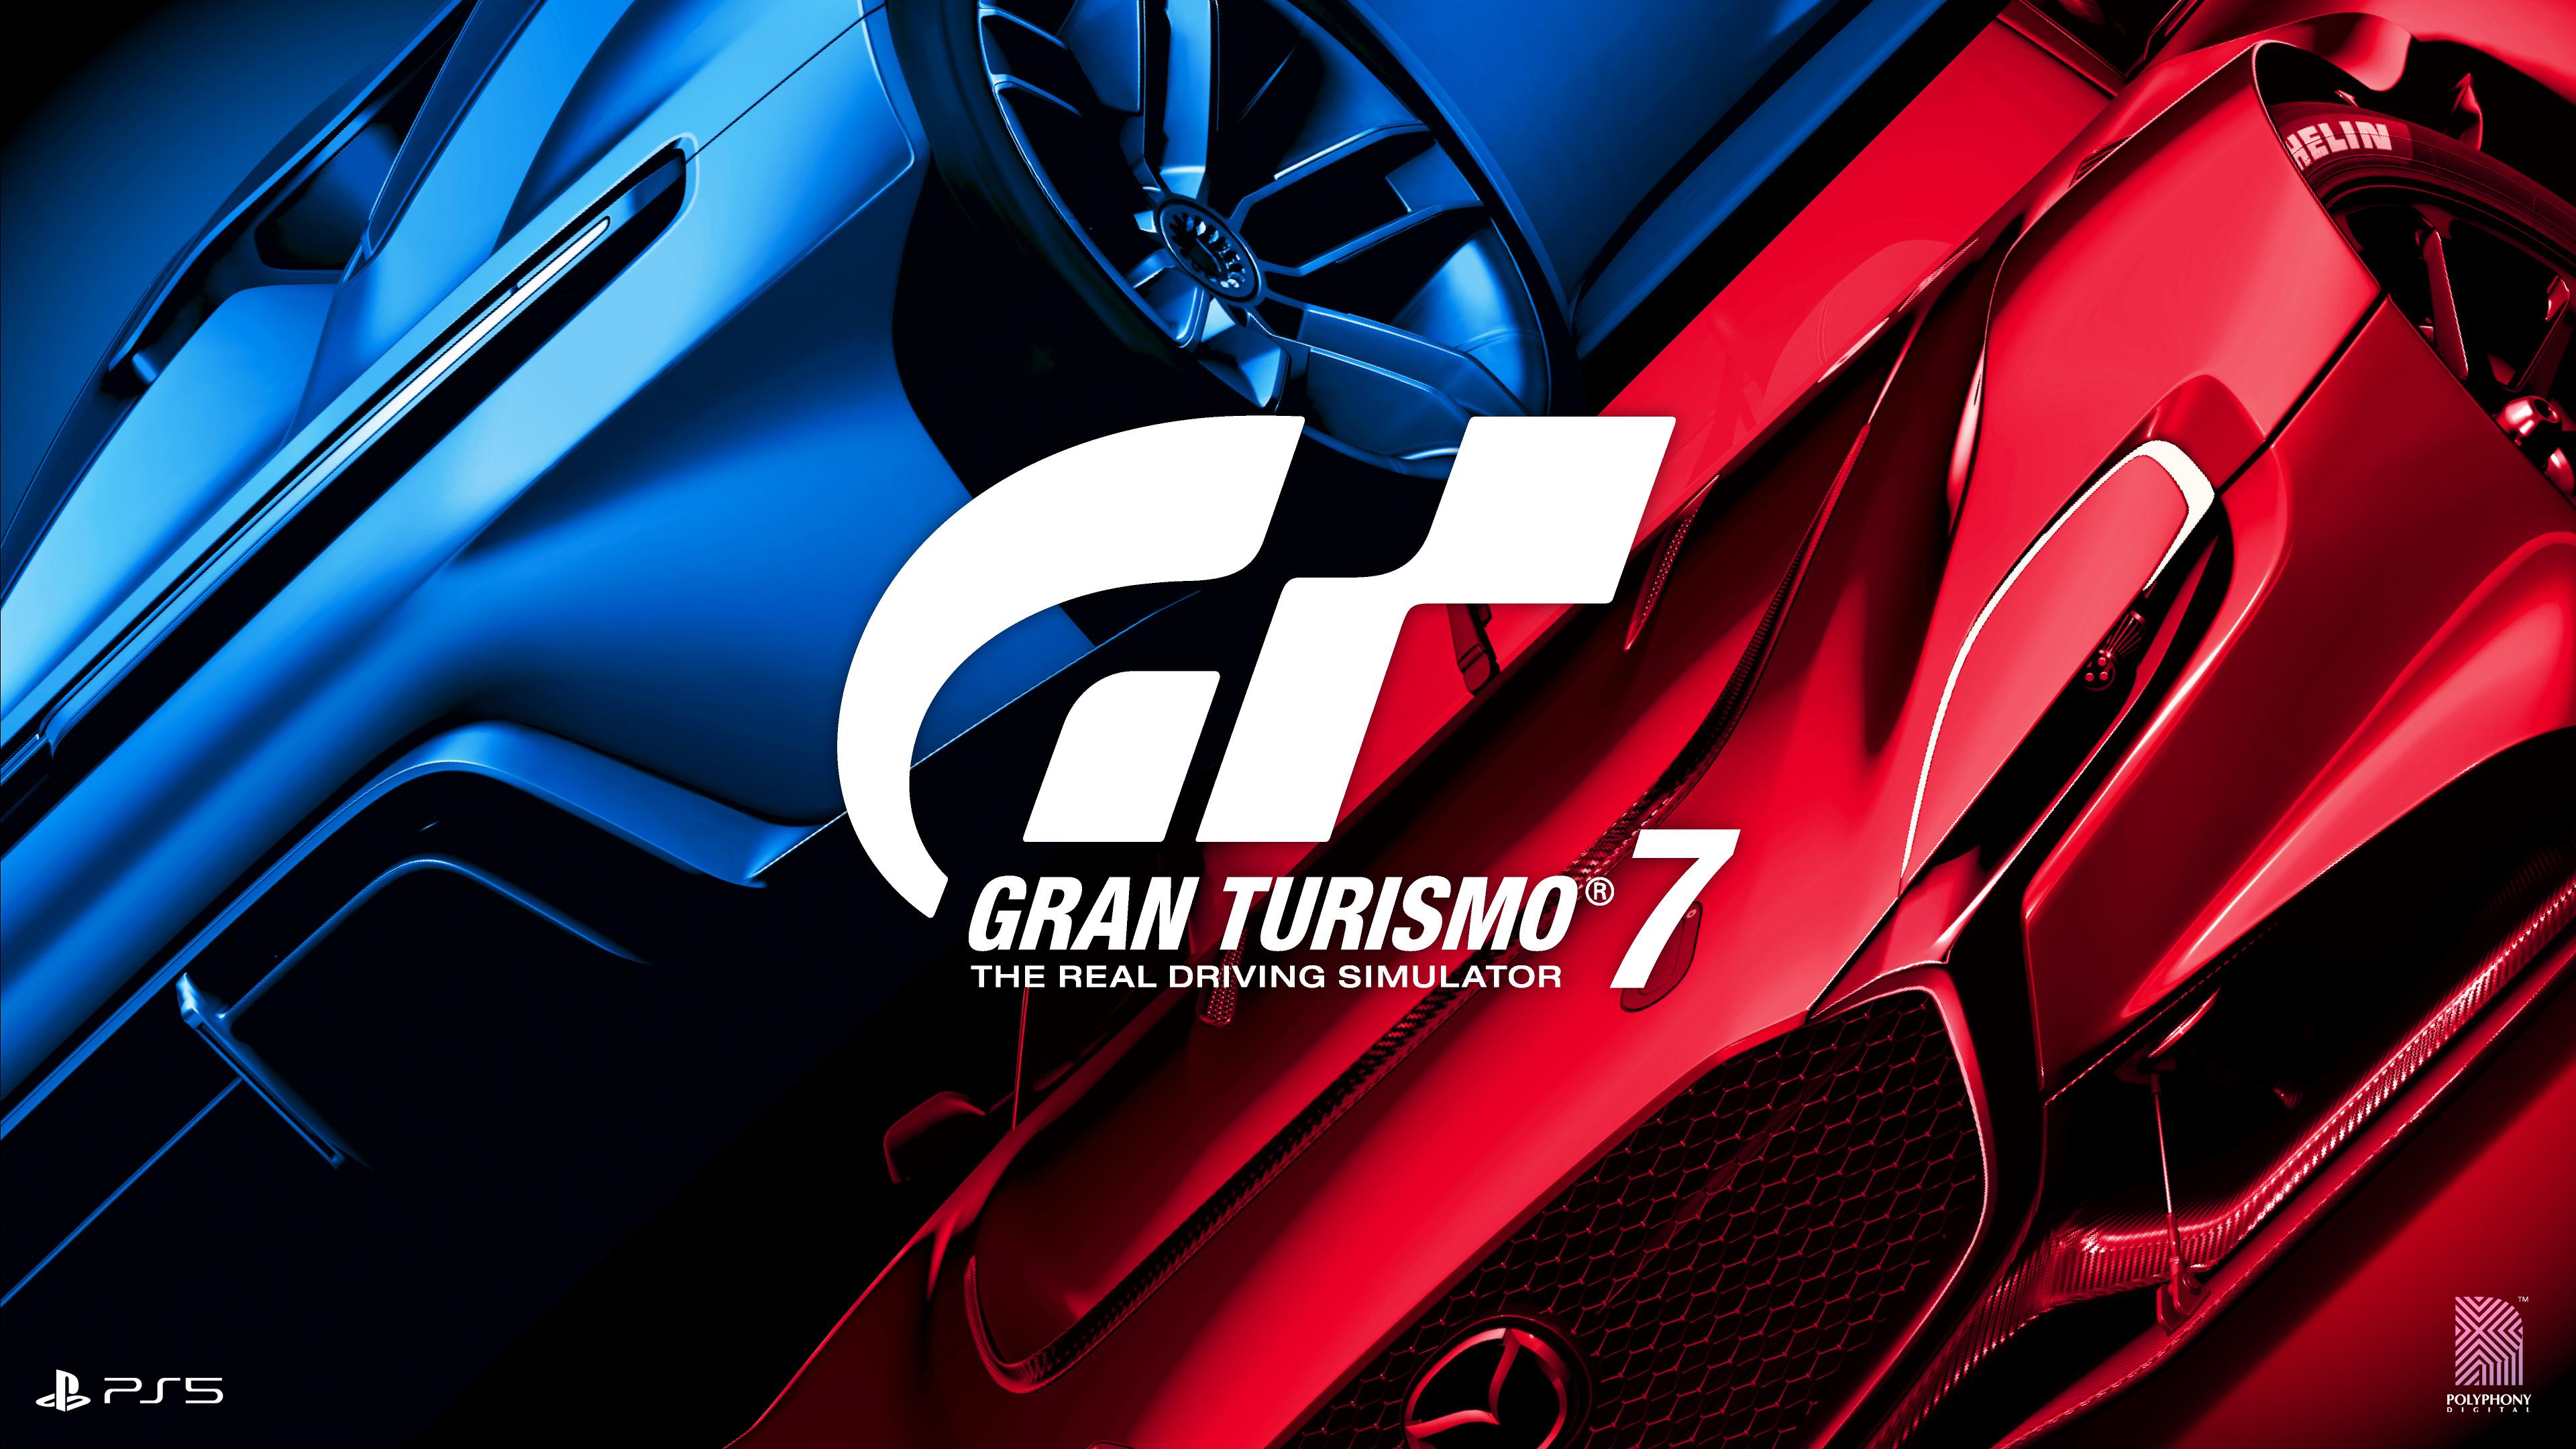 GRAN TURISMO 7 PS5 Cover. Ultra 4K Wallpaper. Enjoy!